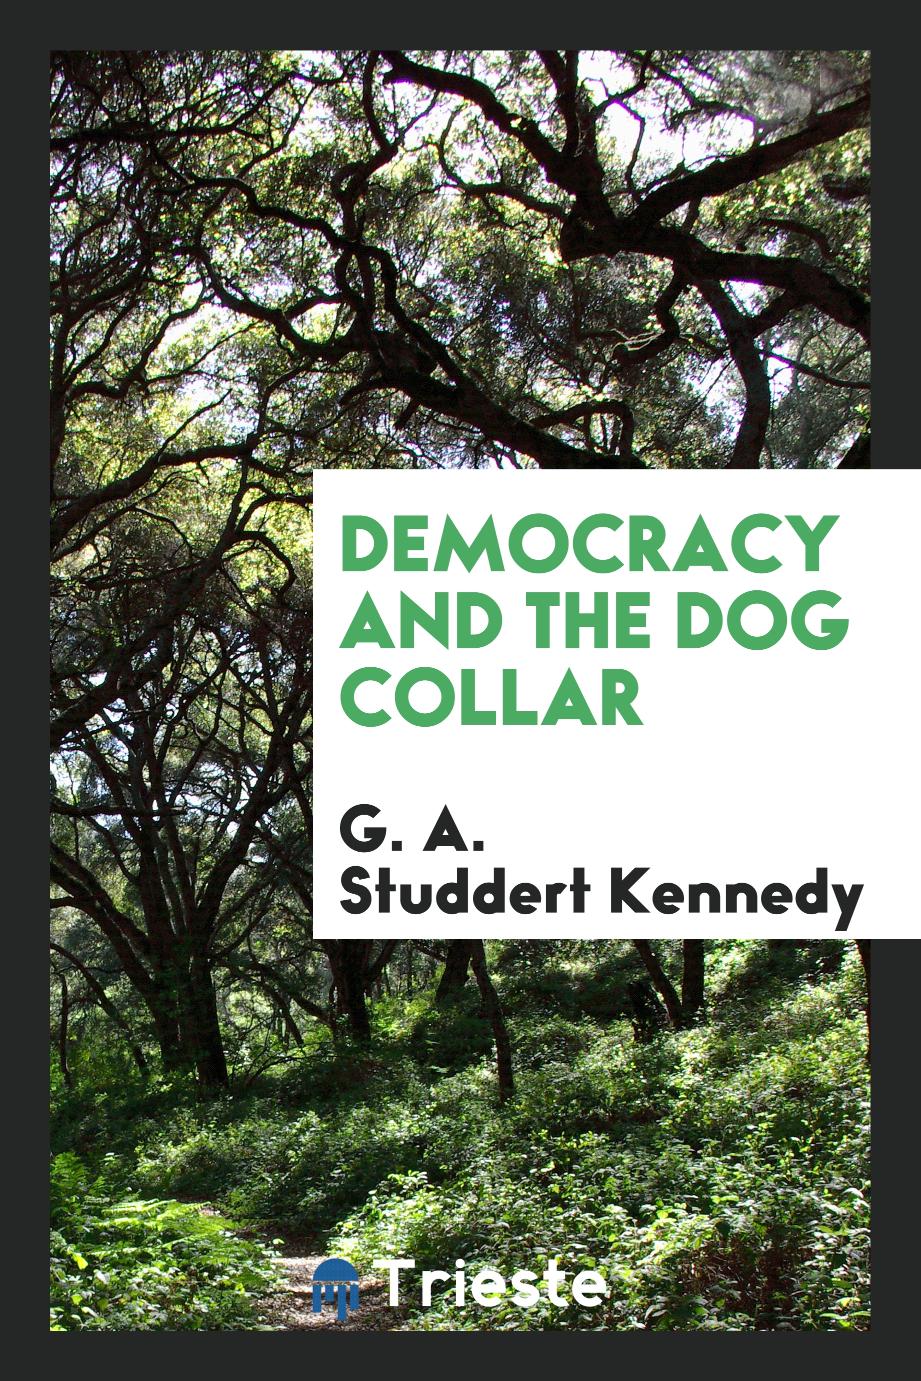 Democracy and the dog collar